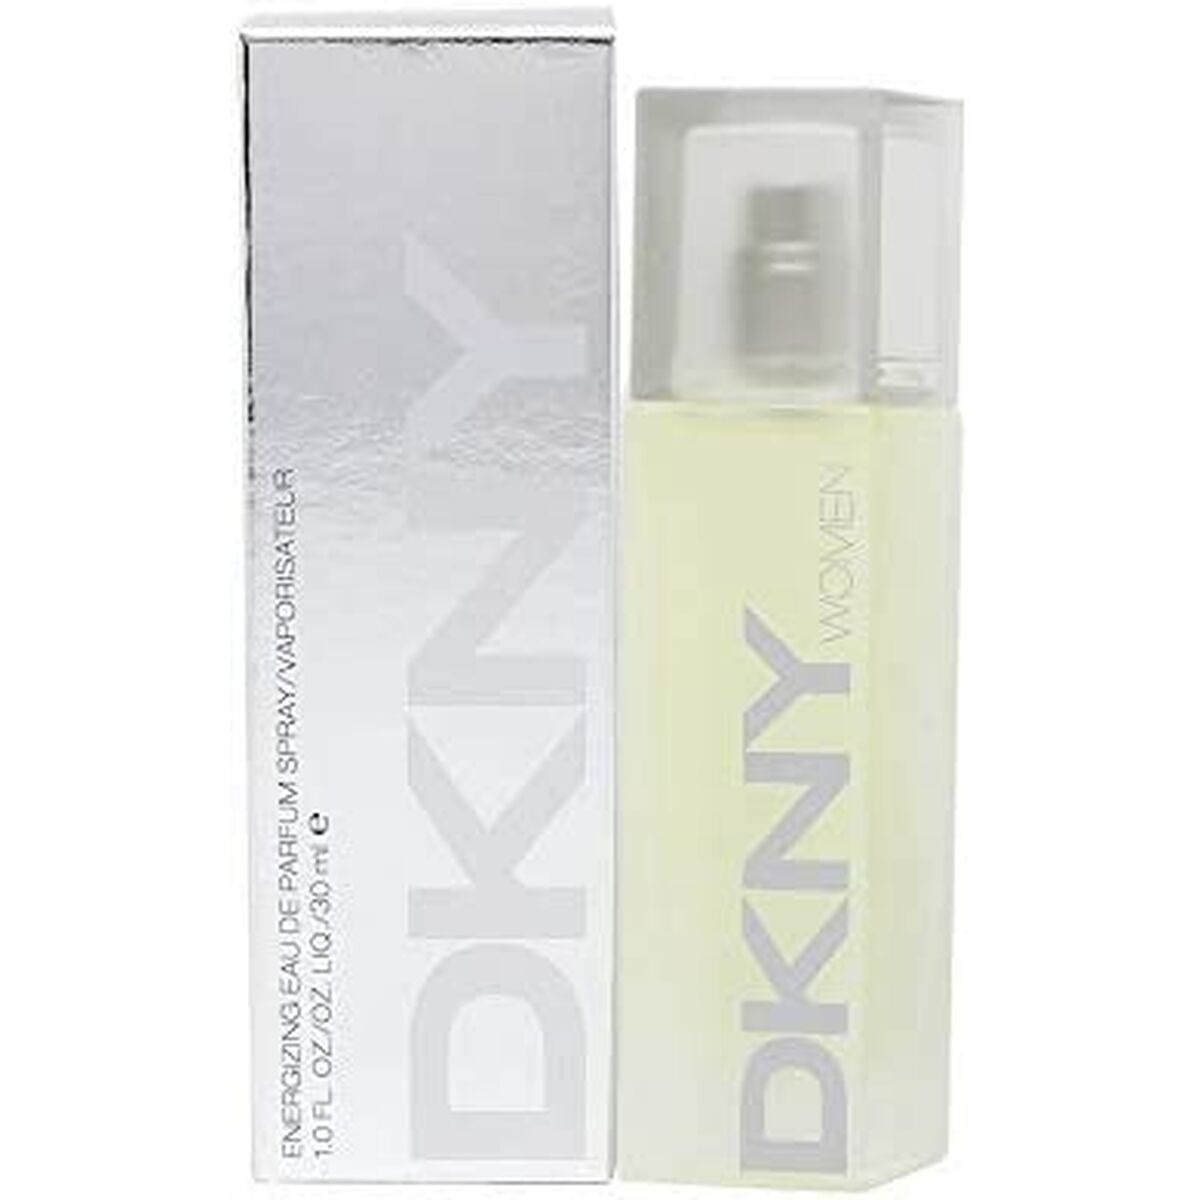 Perfume kobiet dkny dnkdknf0103002 EDP EDP 30 ml